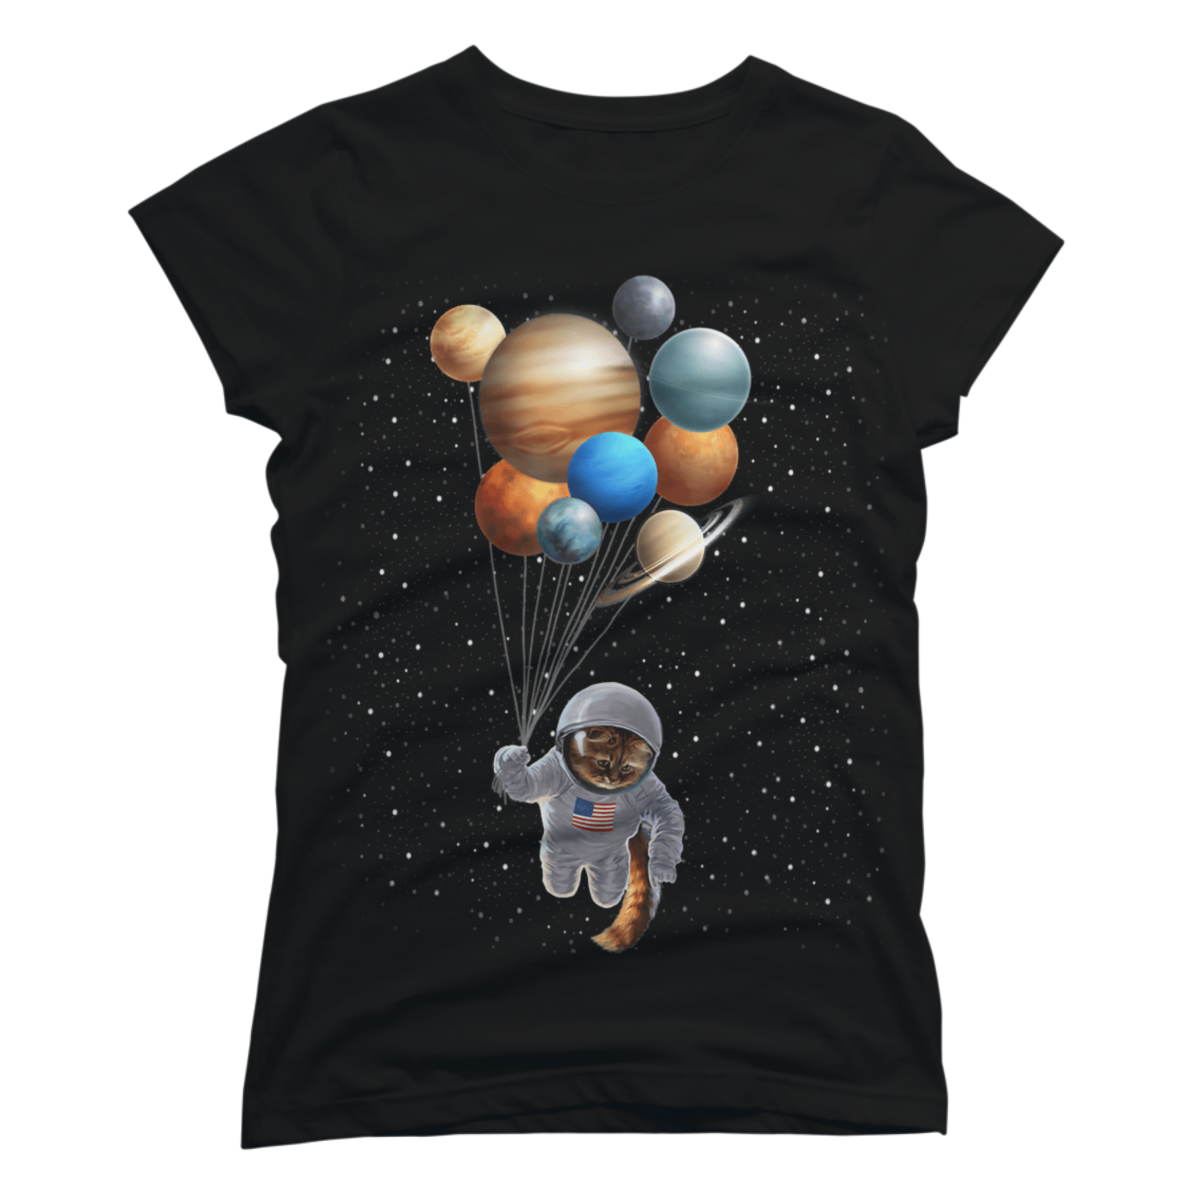 astronaut holding planet balloons shirt